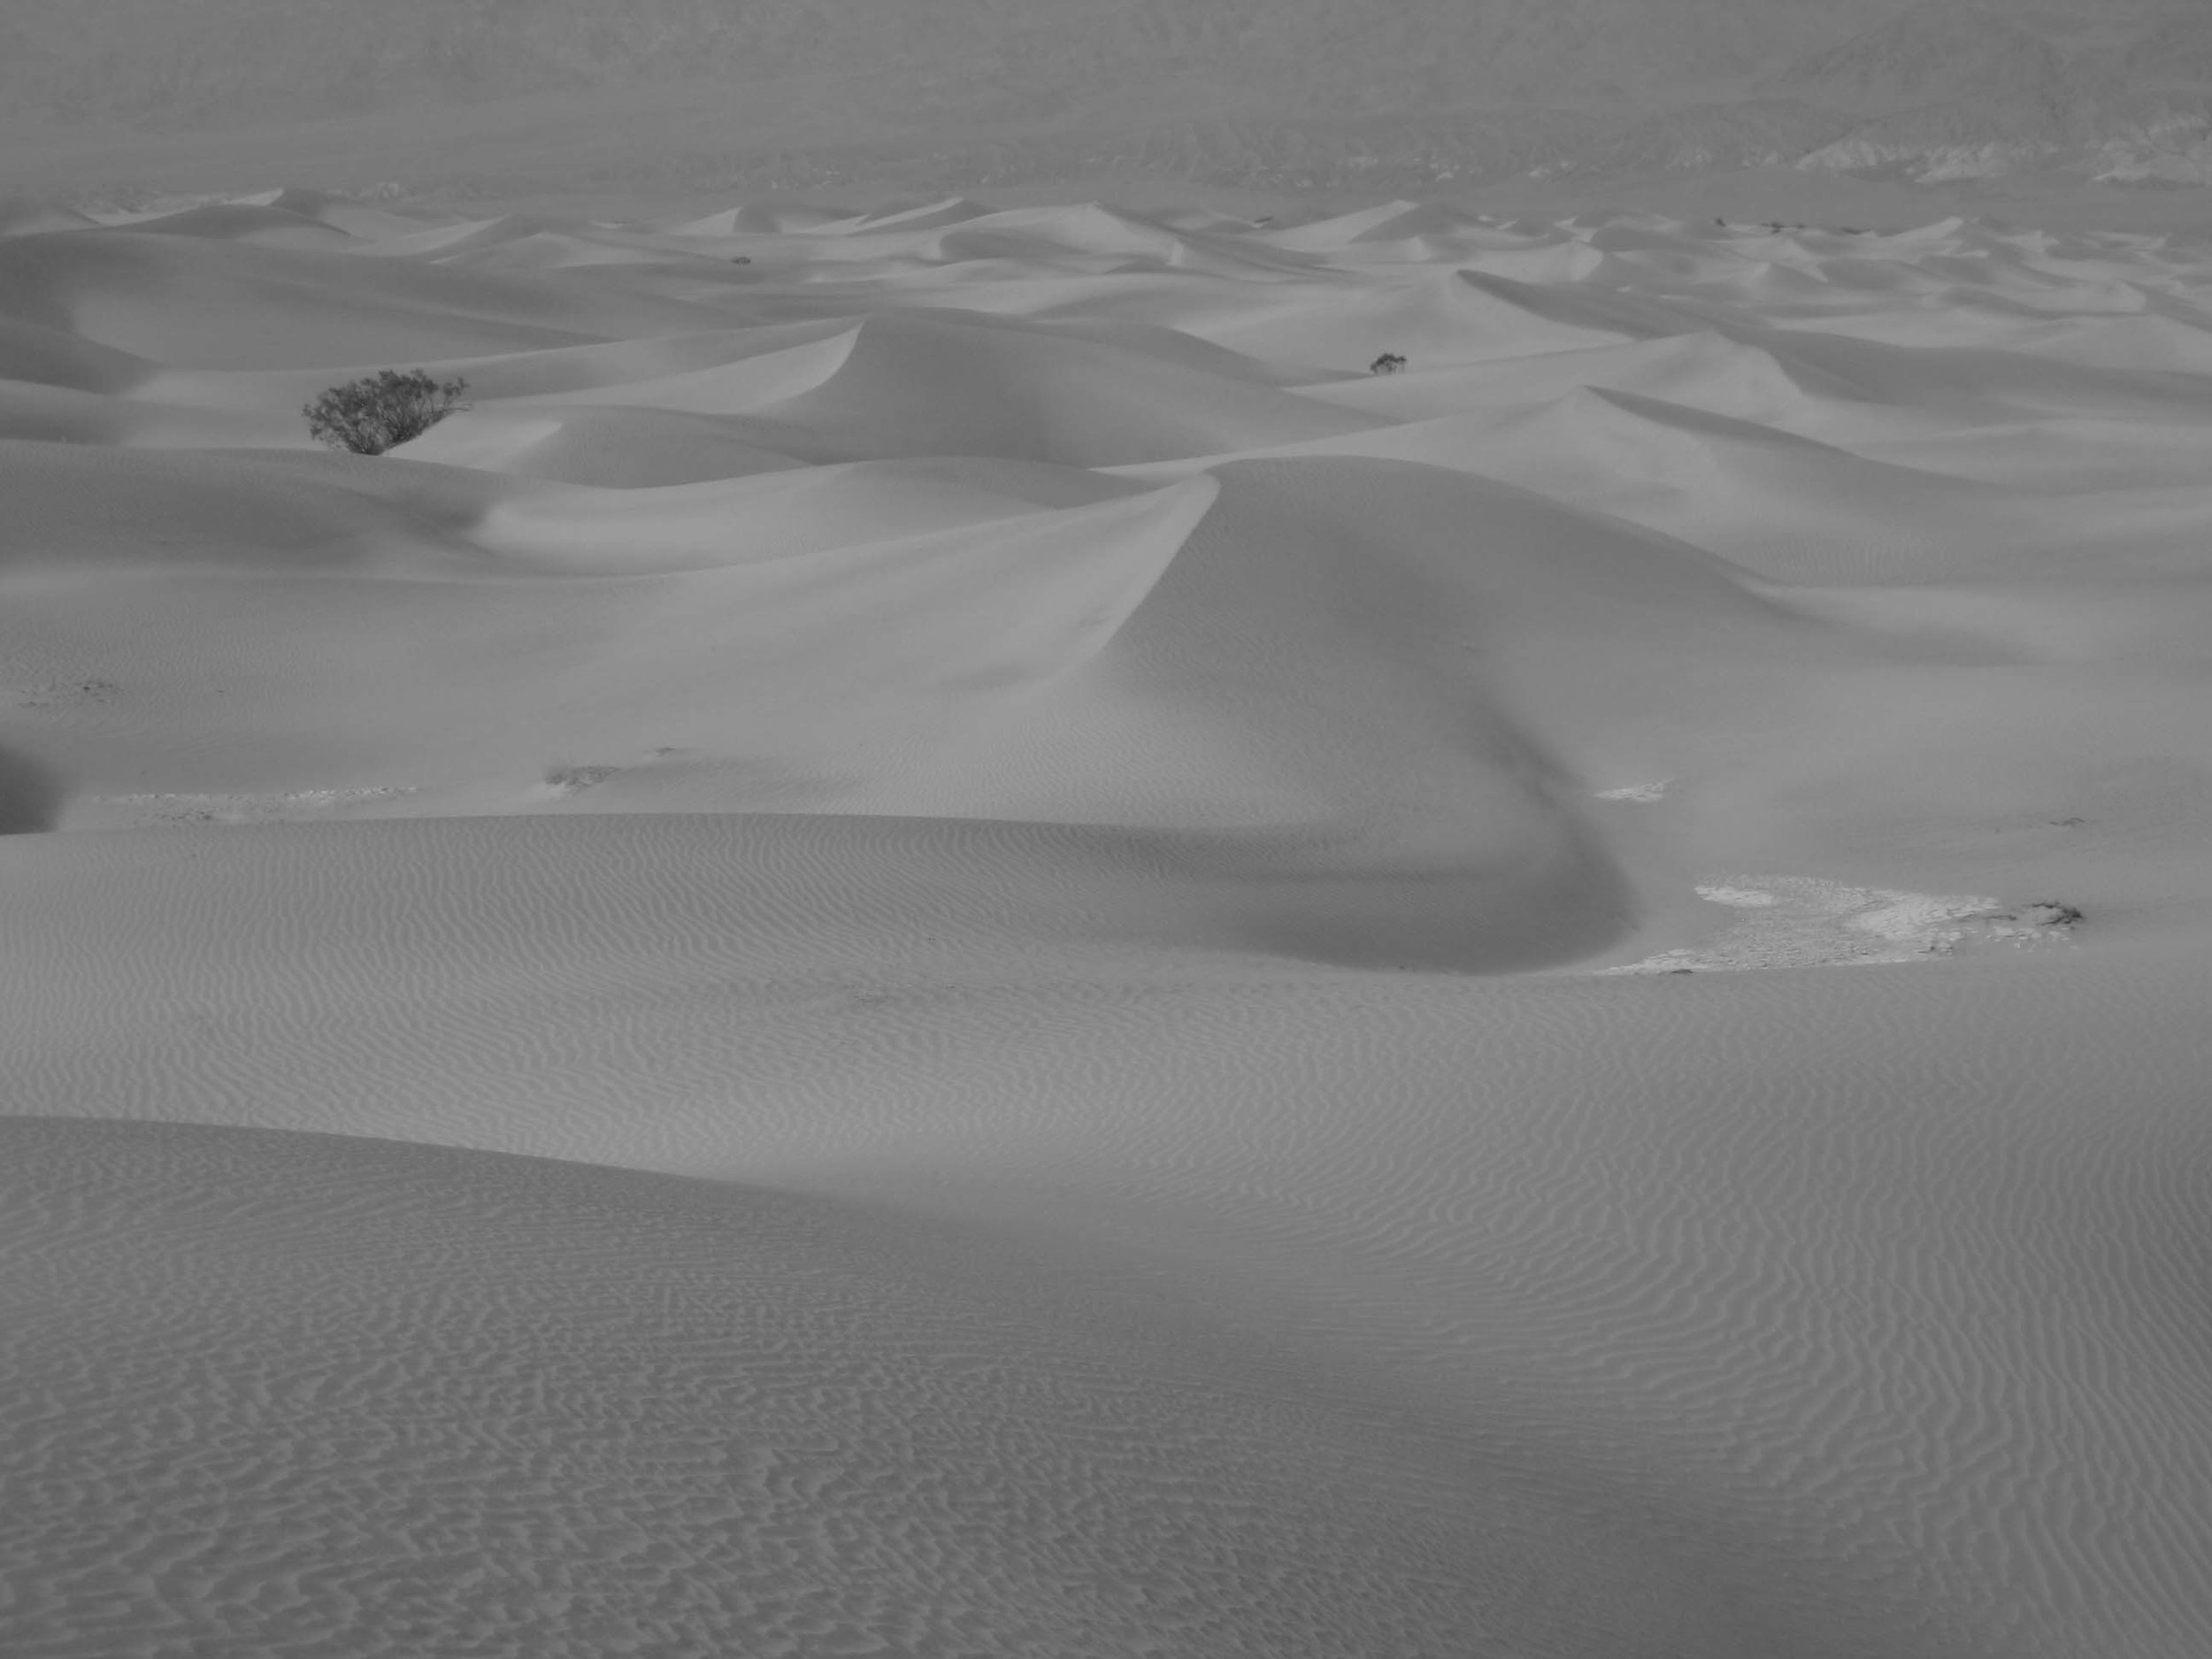    Mesquite Flat Sand Dunes, Death Valley National Park   